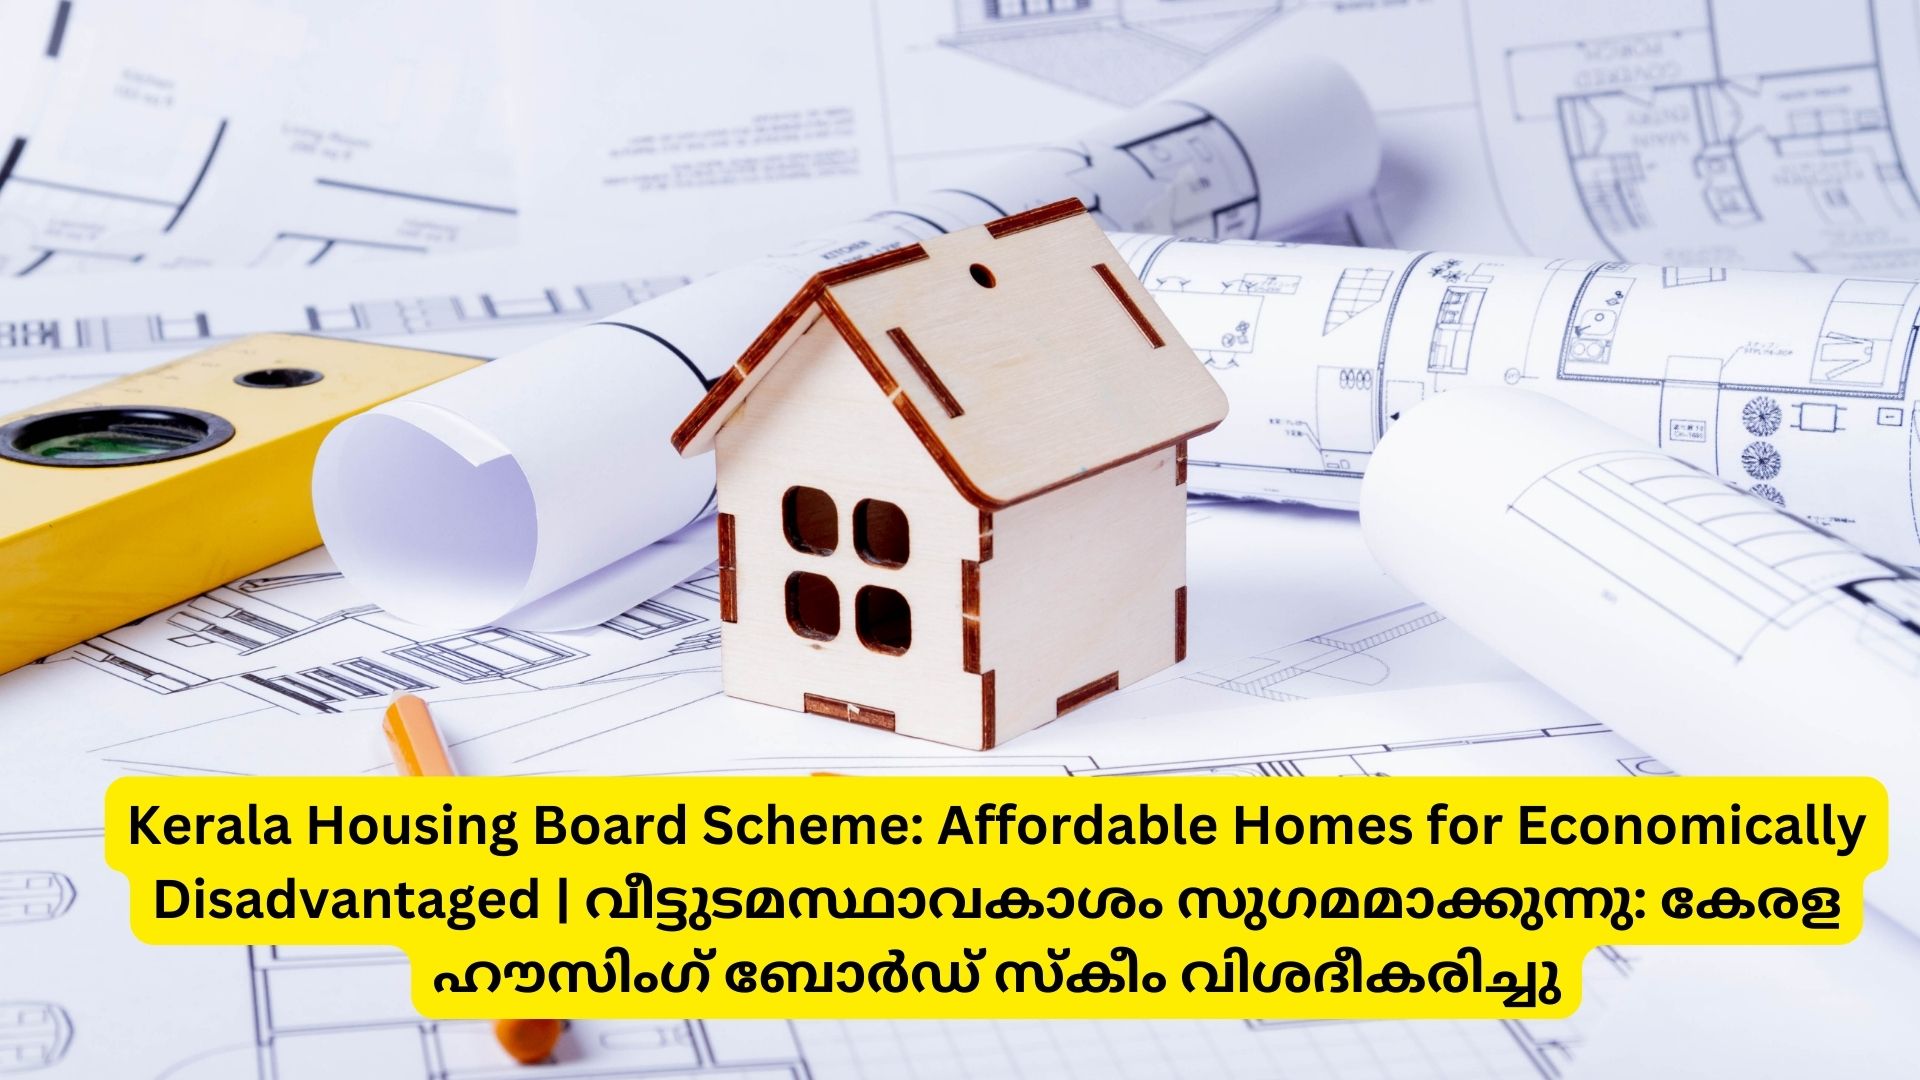 Kerala Housing Board Scheme: Affordable Homes for Economically Disadvantaged | വീട്ടുടമസ്ഥാവകാശം സുഗമമാക്കുന്നു: കേരള ഹൗസിംഗ് ബോർഡ് സ്കീം വിശദീകരിച്ചു